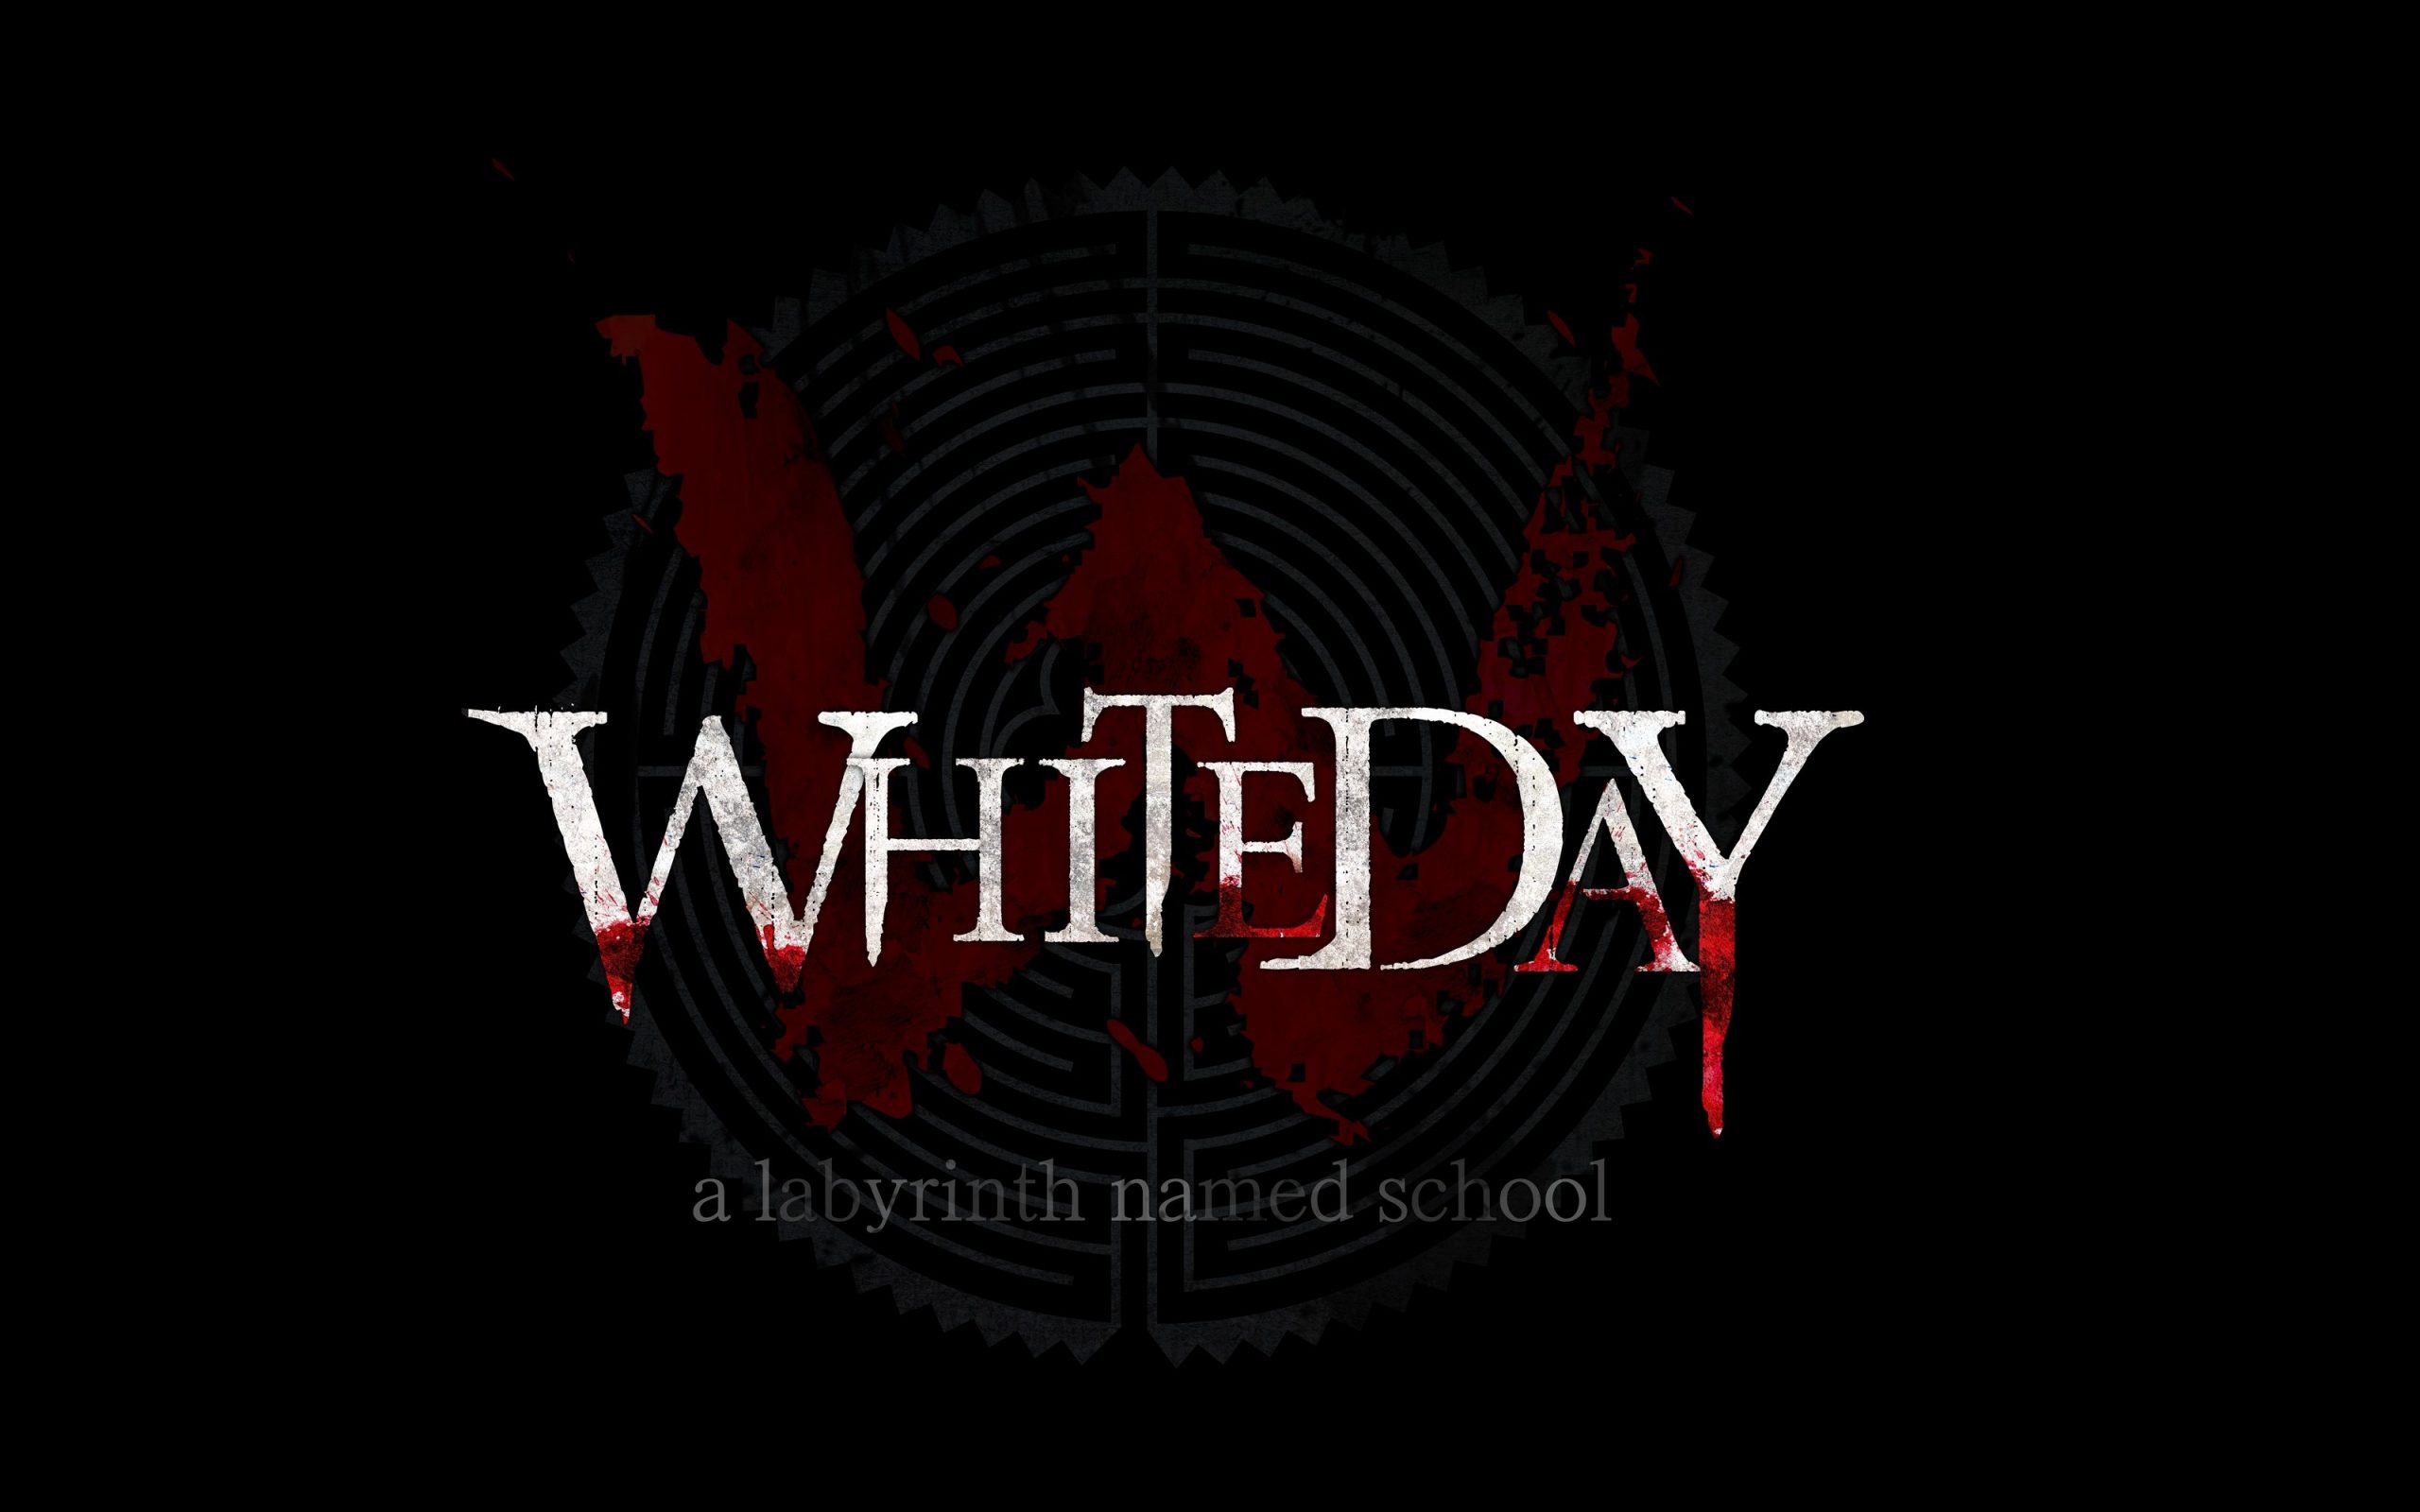 Вы сейчас просматриваете White Day: A Labyrinth Named School выйдет на Nintendo Switch